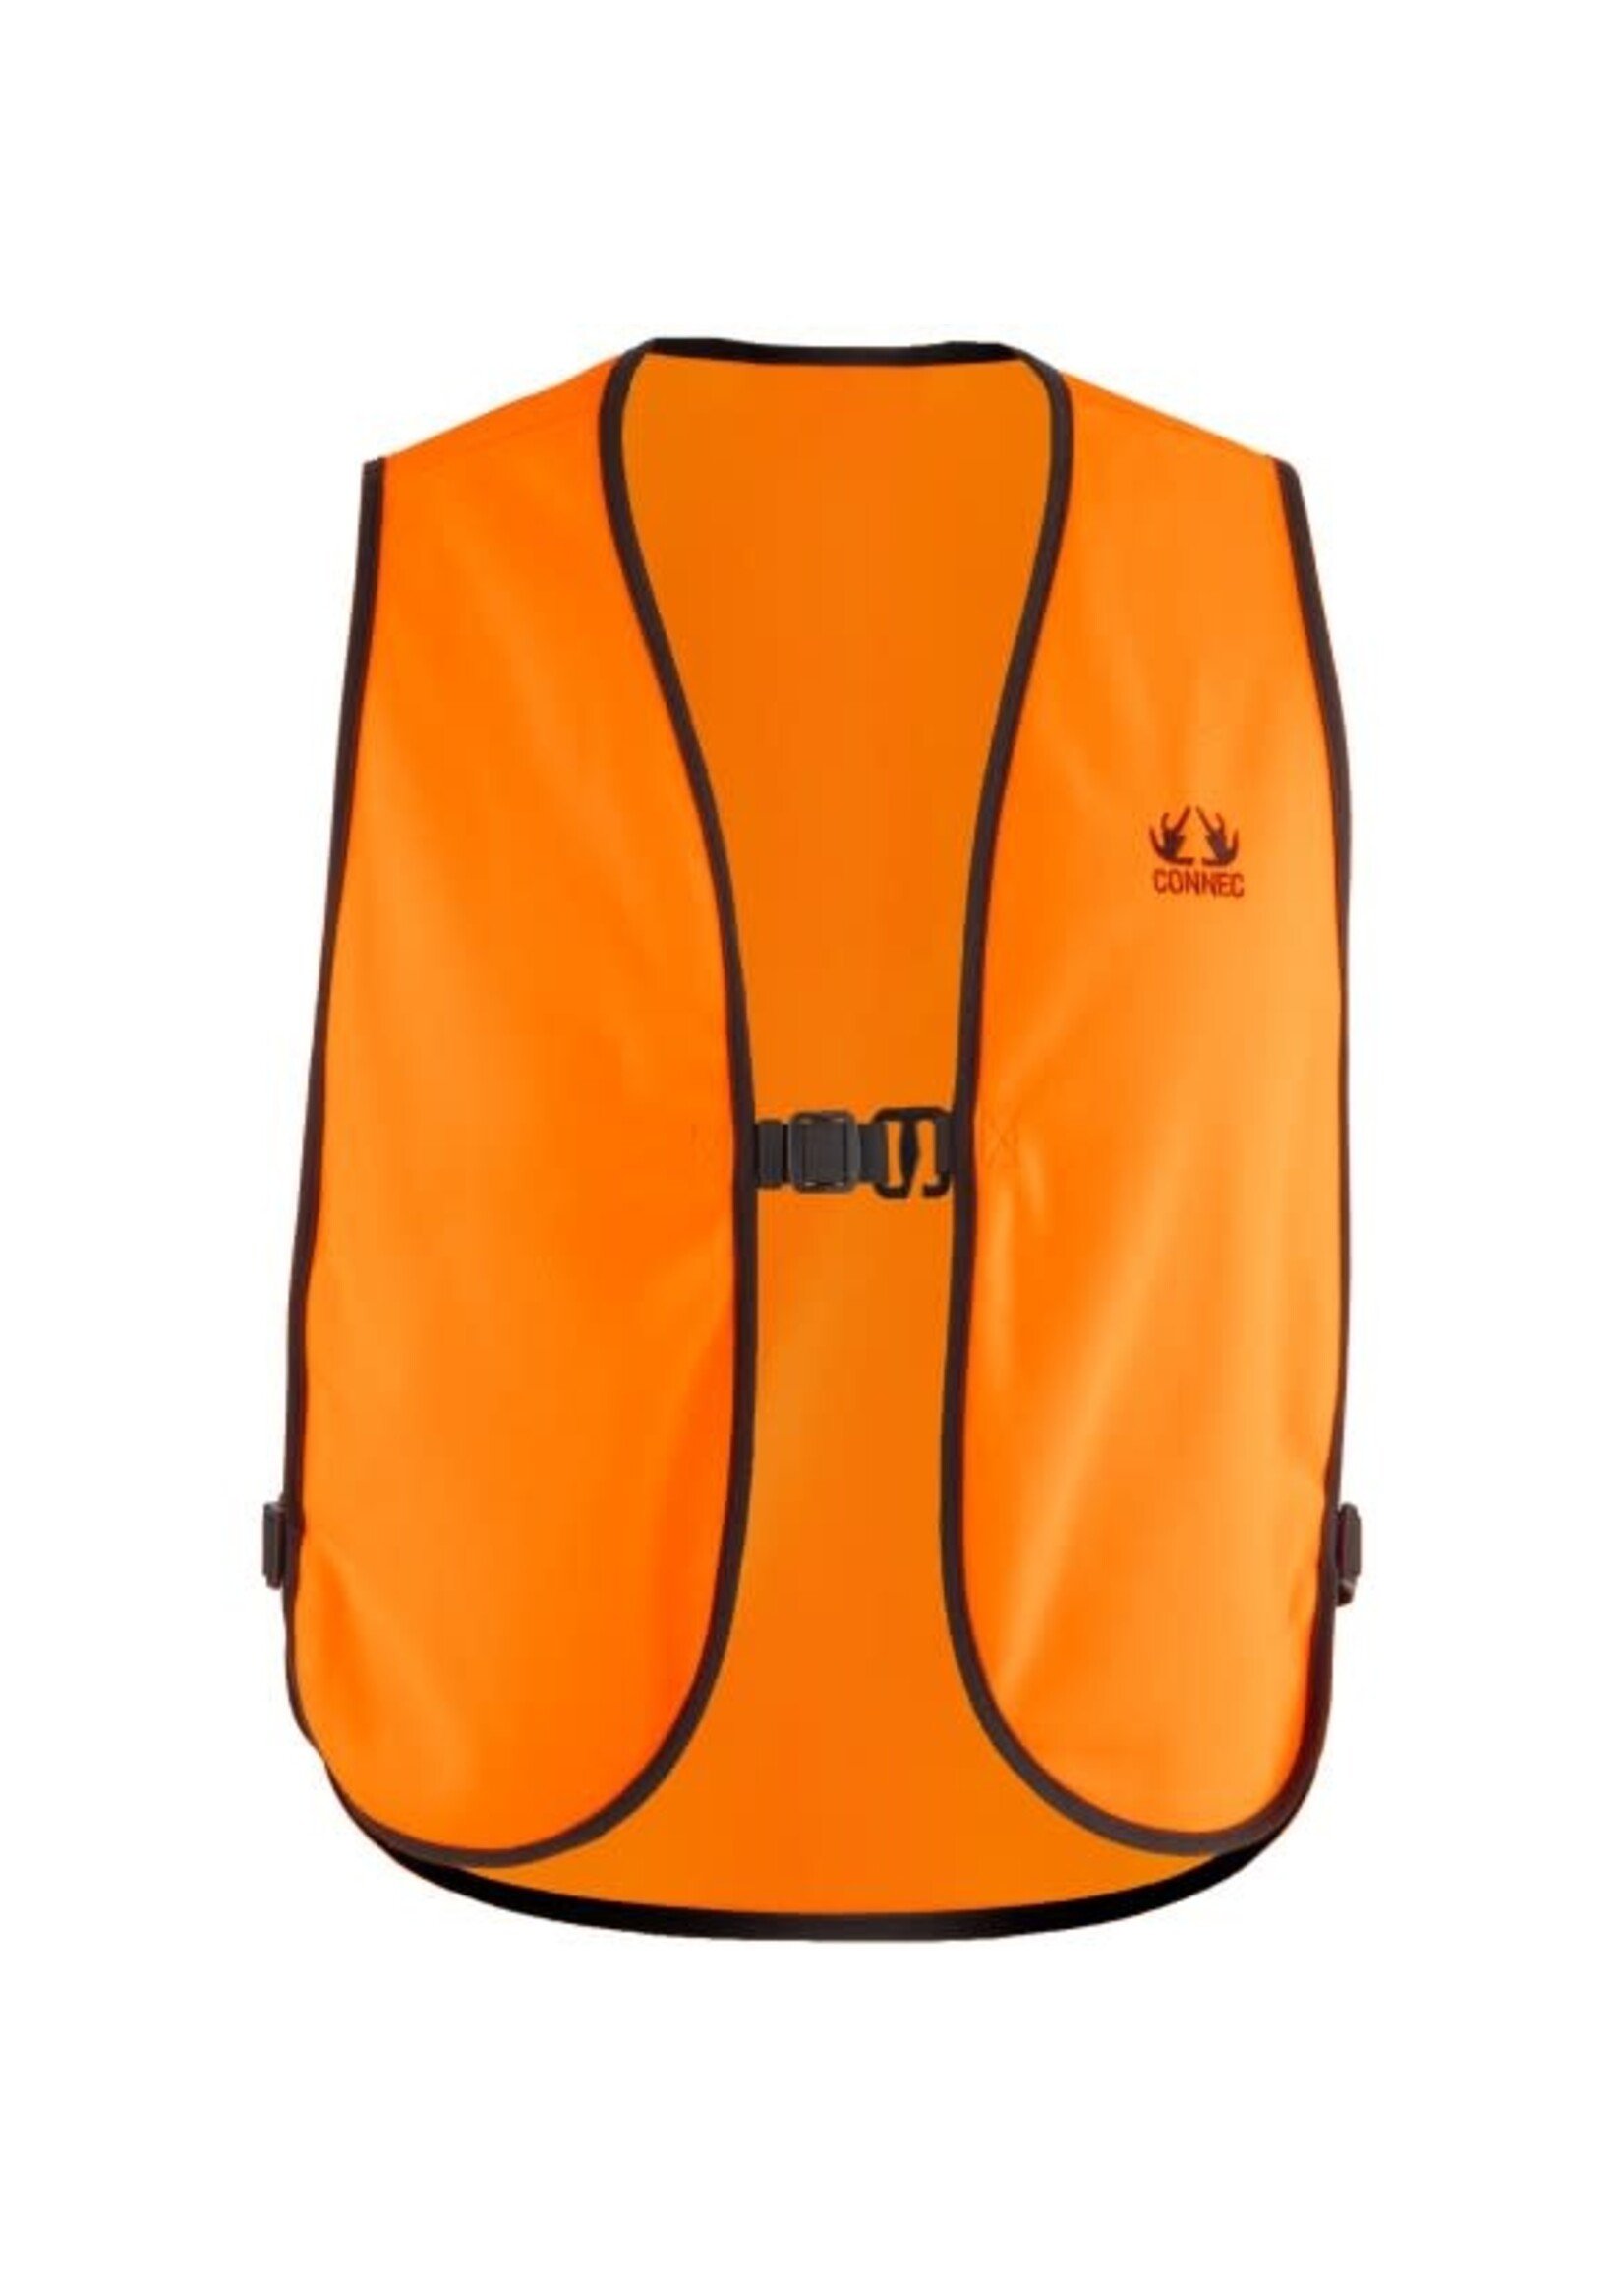 Connec Outdoor safety vest blaze orange